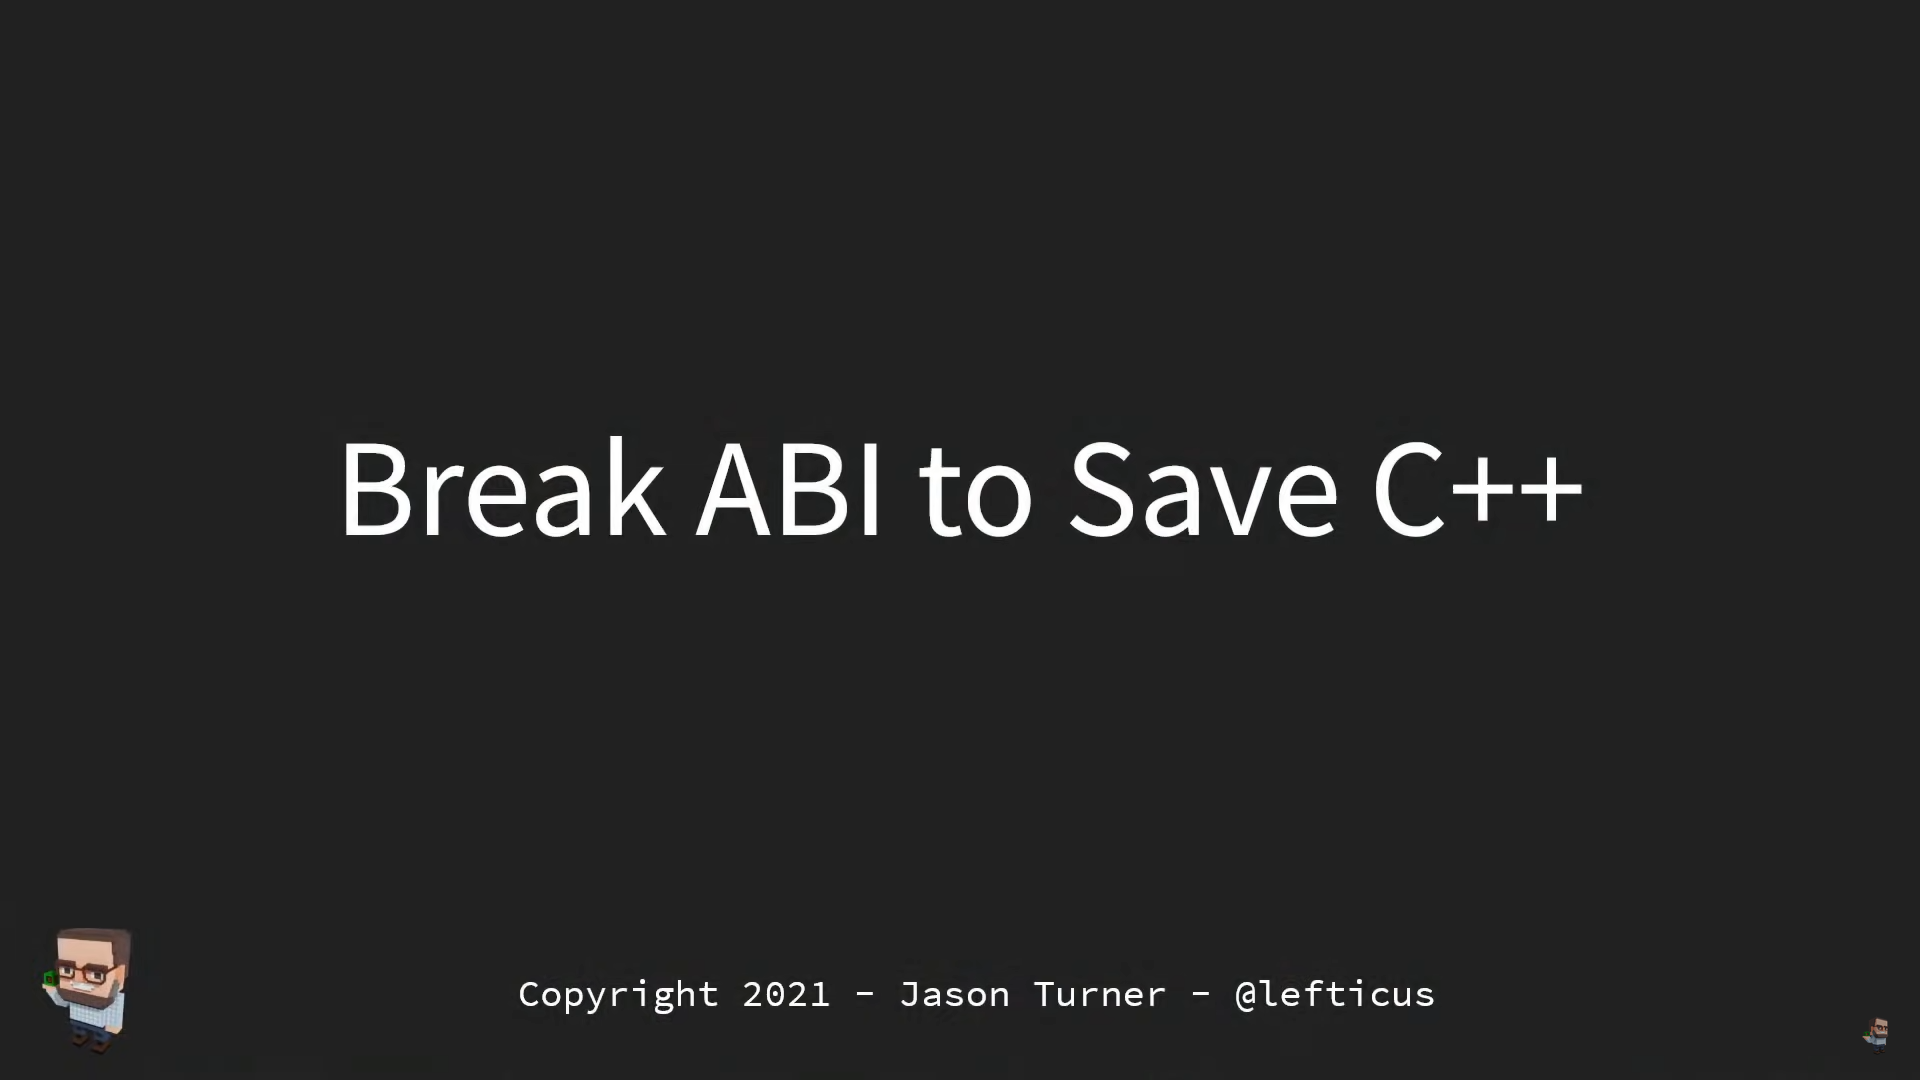 Jason Turner's C++ Weekly 270 titled "Break ABI to Save C++"